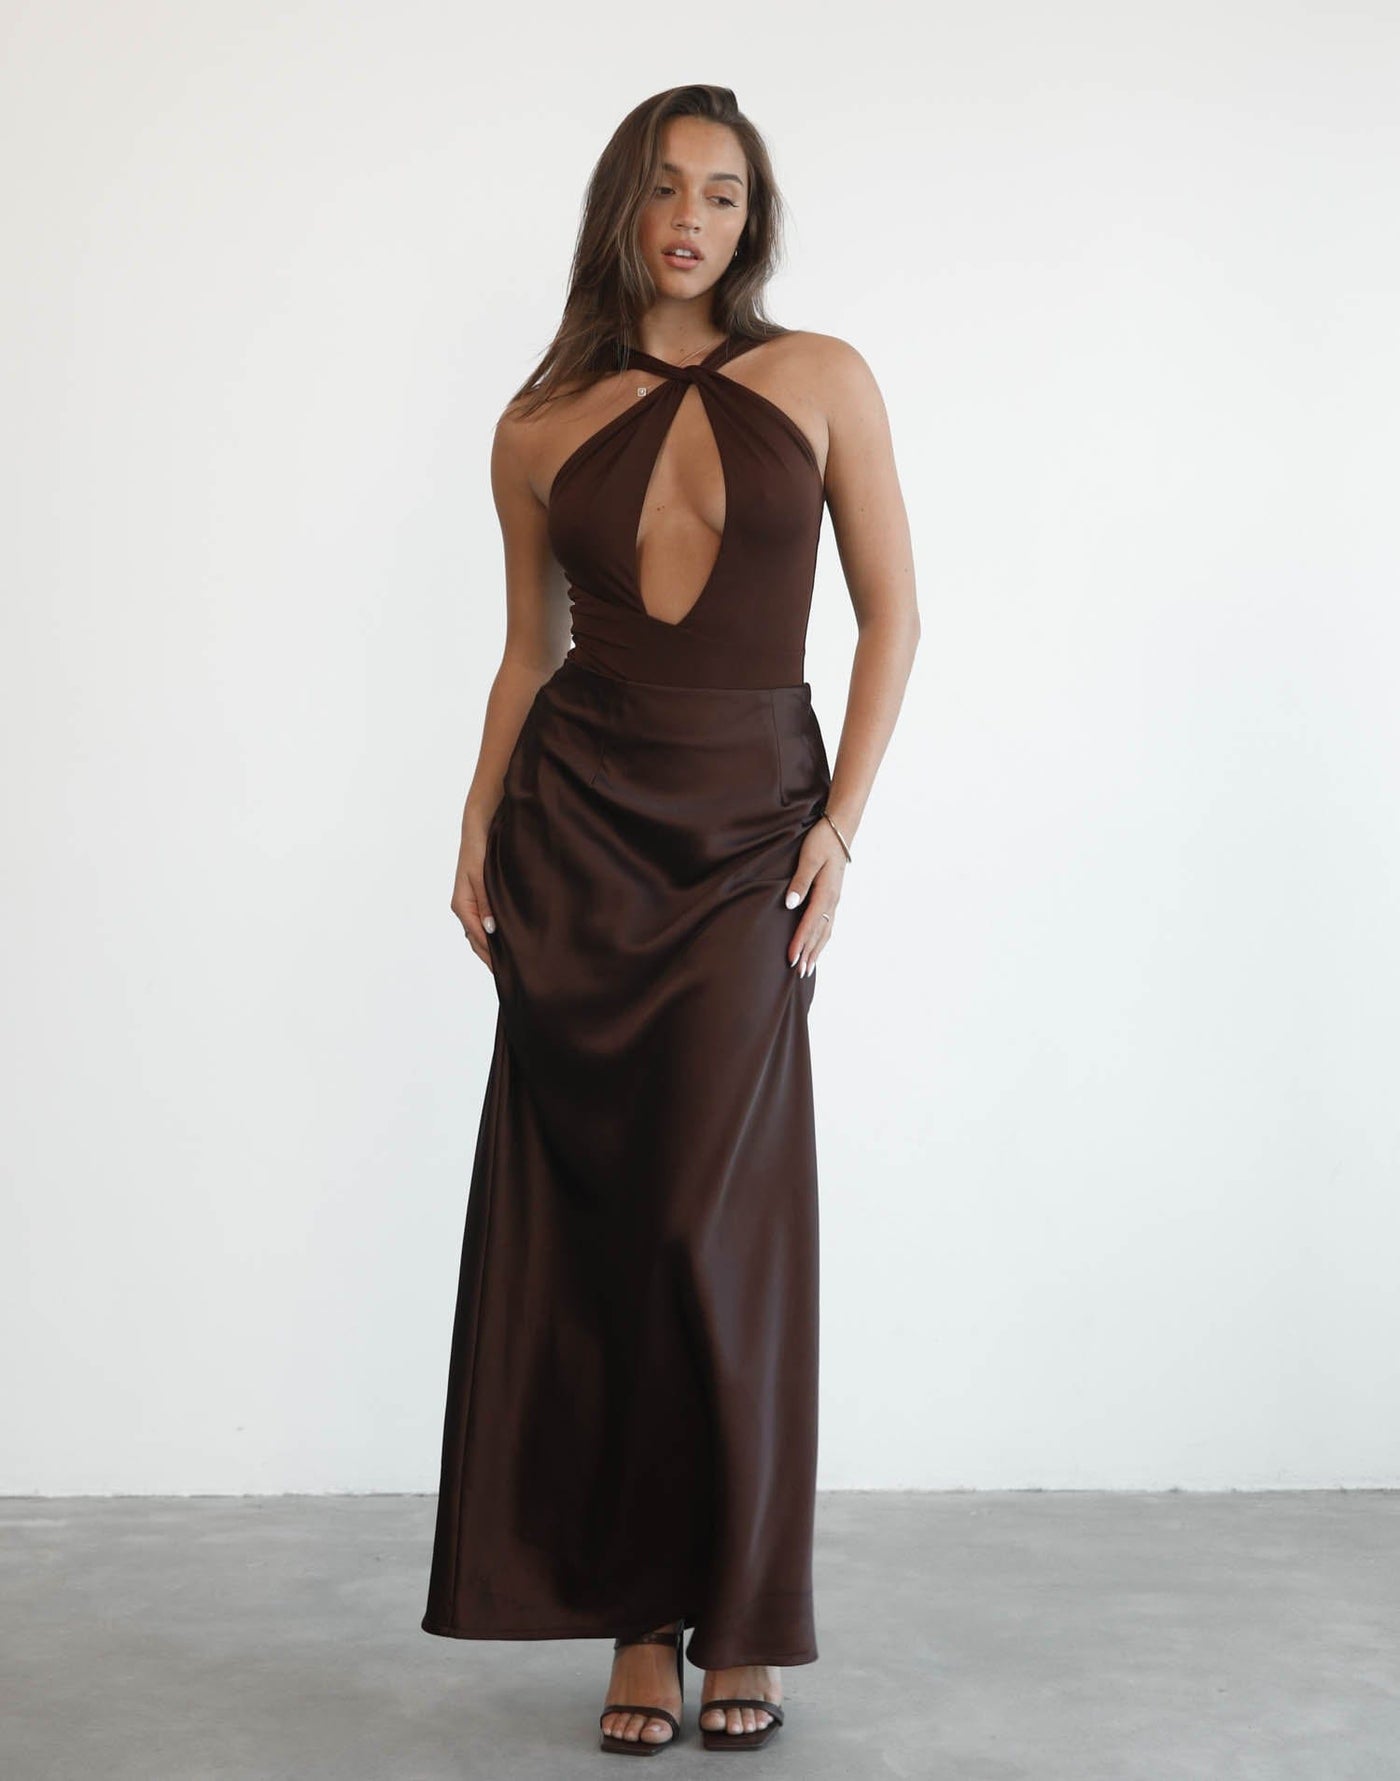 Sylvie Bodysuit (Cocoa) - Brown Asymmetrical Bodysuit - Women's Top - Charcoal Clothing